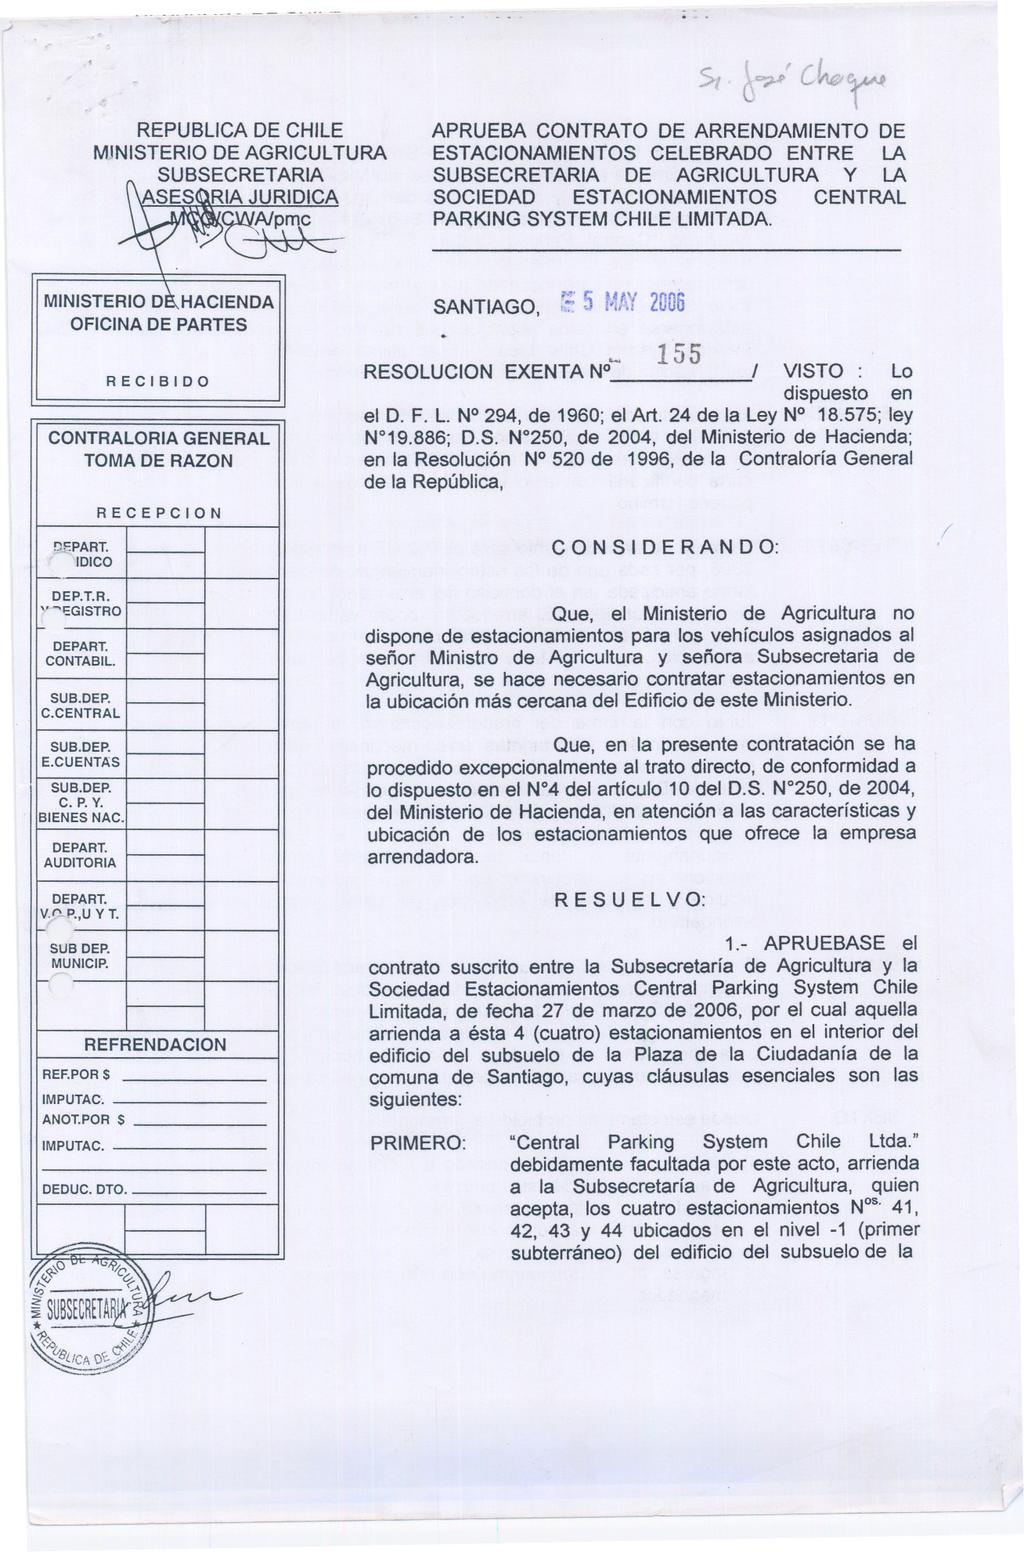 REPUBLlCA DE CHILE MINISTERIO DE AGRICULTURA SUBSECRETARIA SESQRIA JURIOICA.